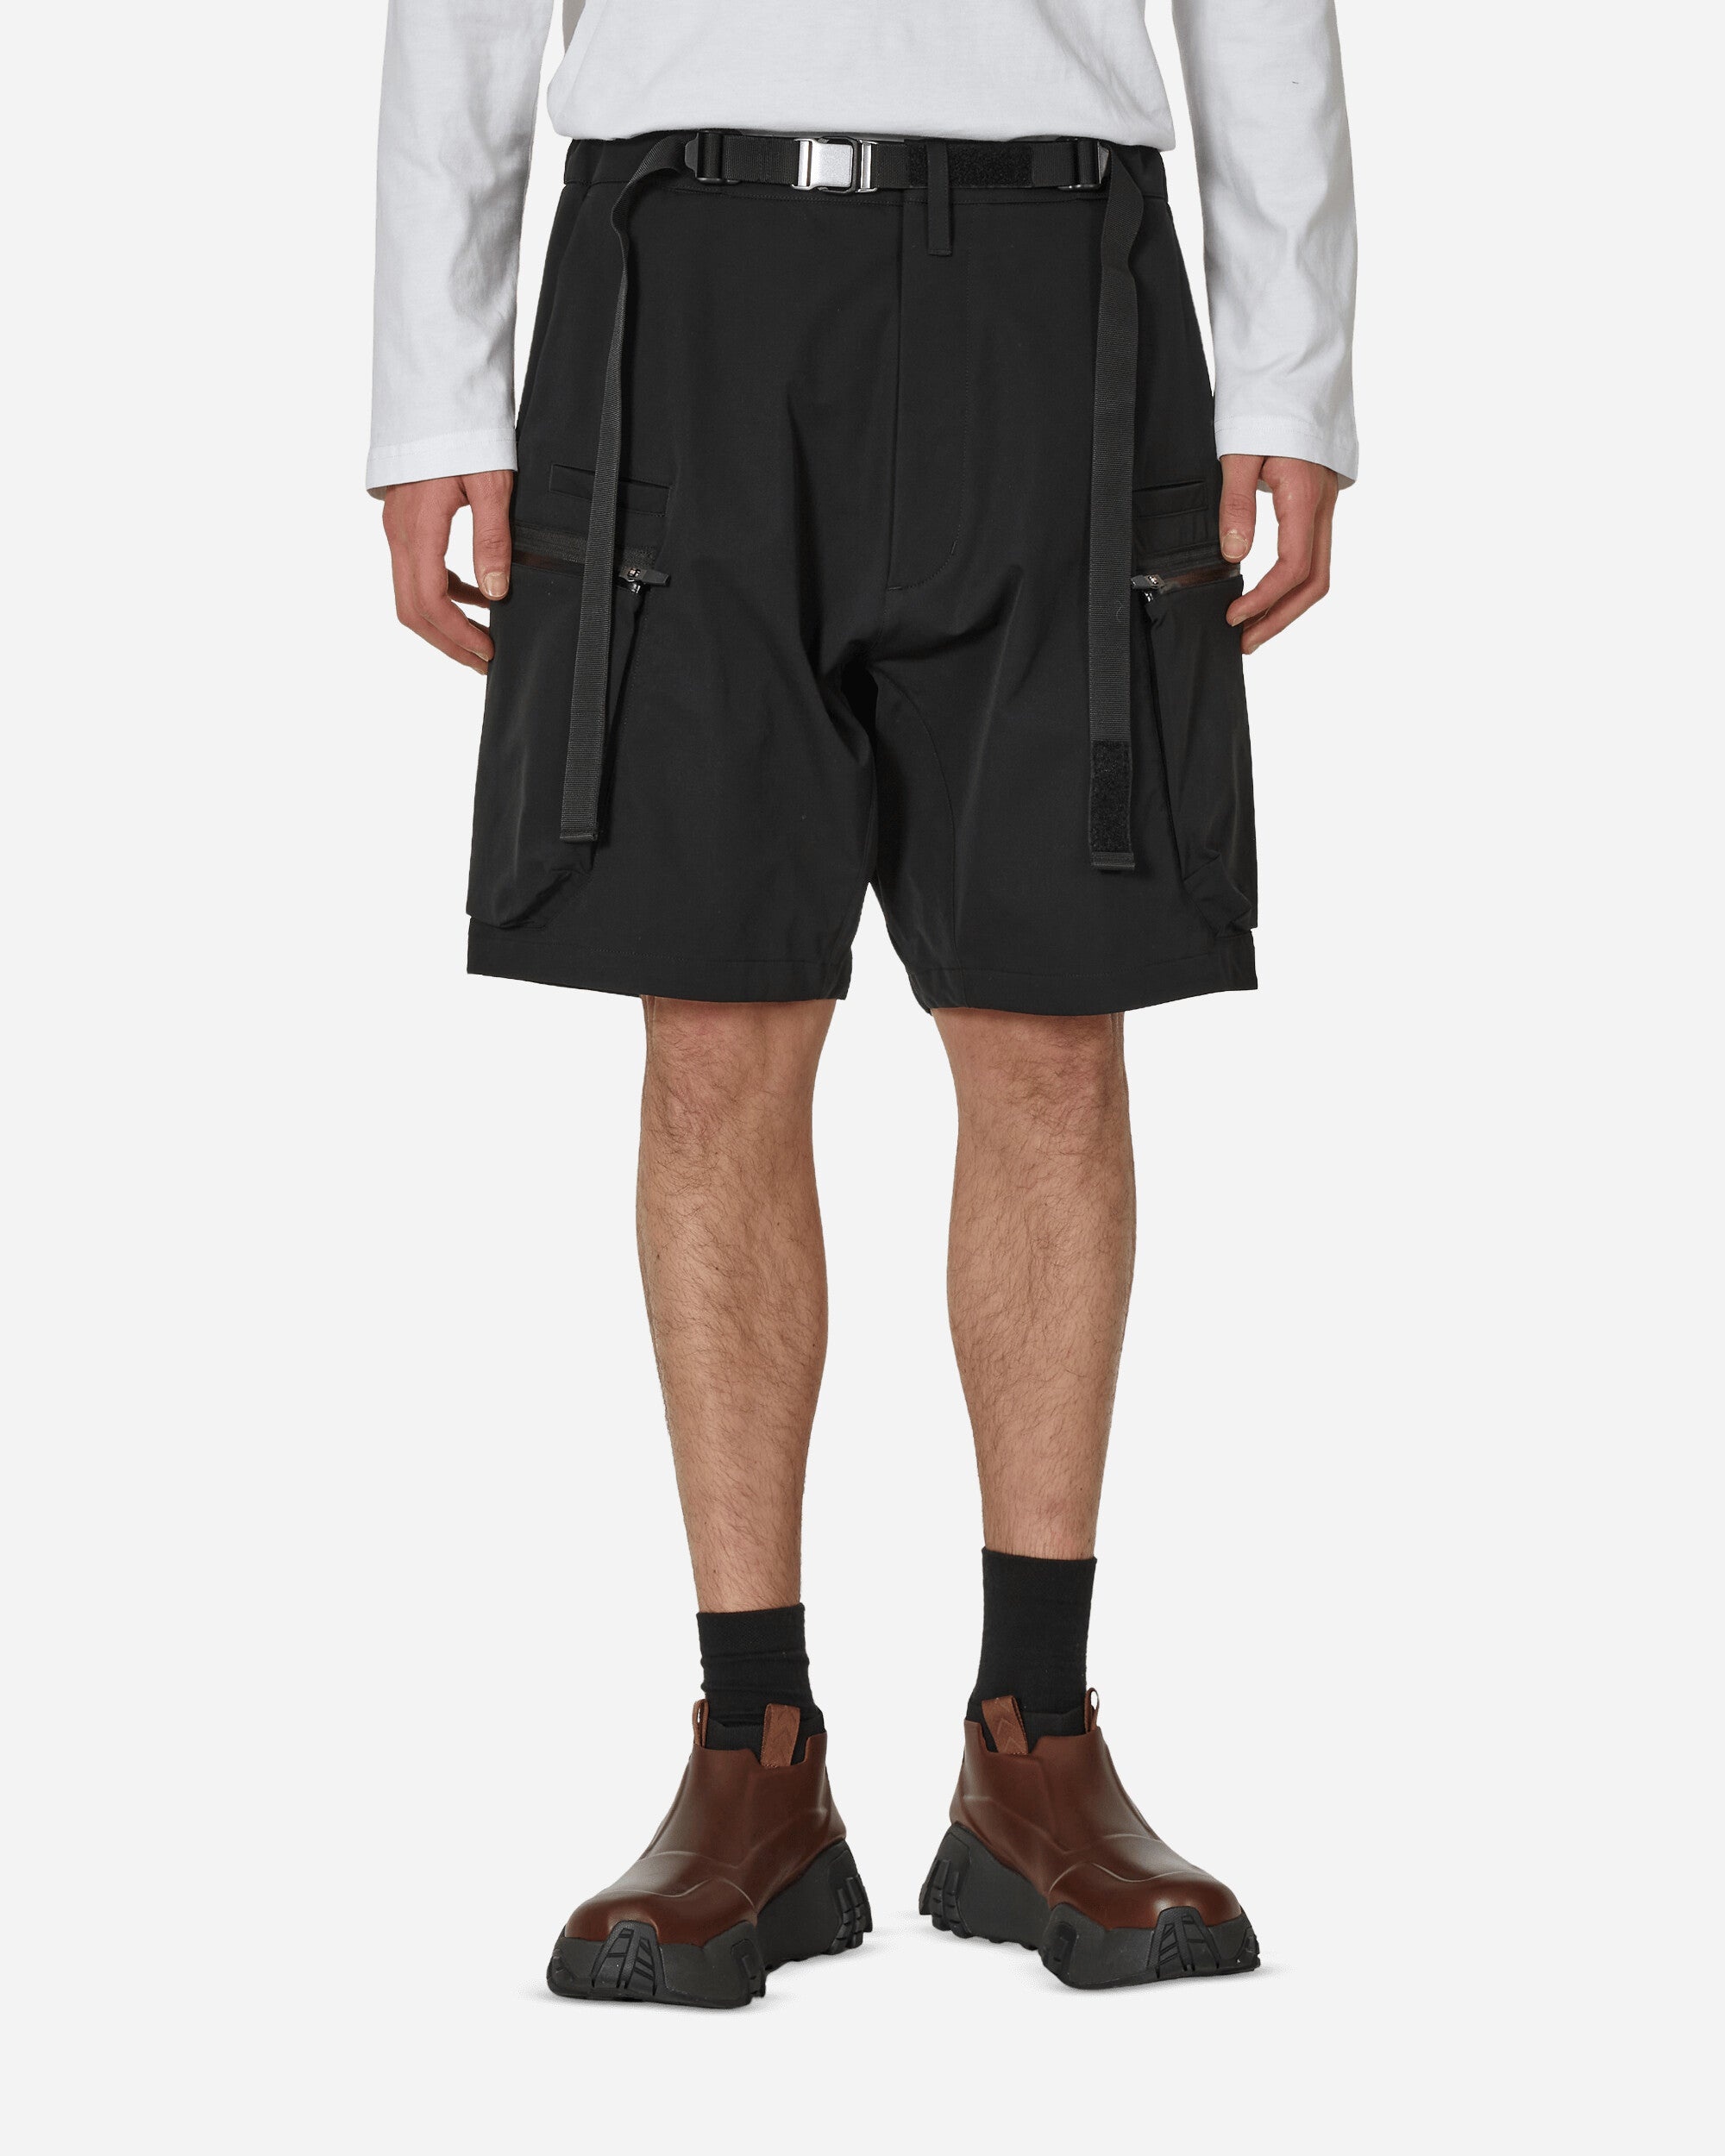 Schoeller Dryskin Cargo Shorts Black - 1